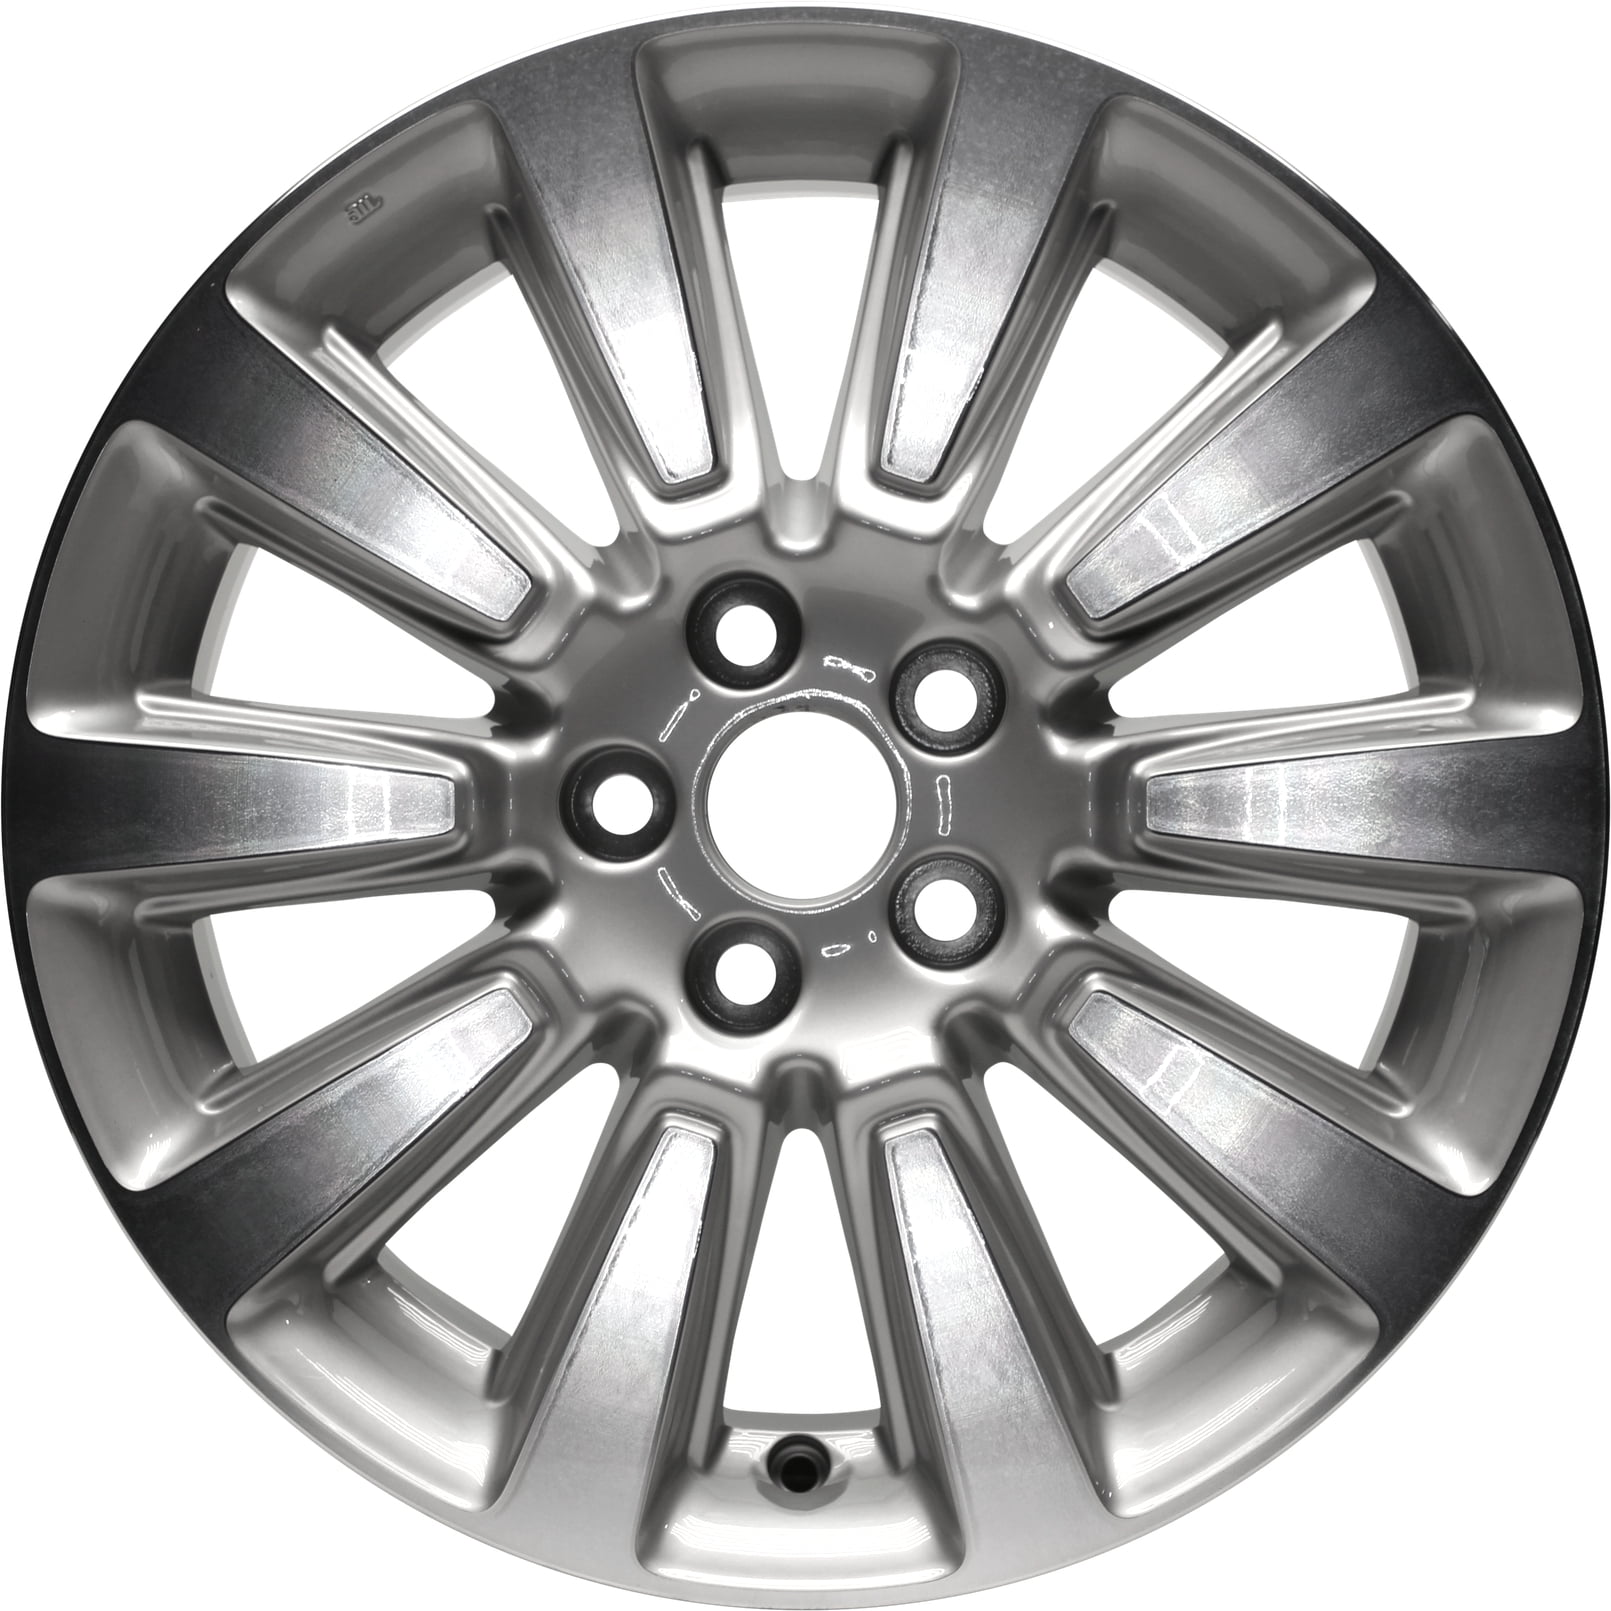 Road Ready Car Wheel Fits 2011-2020 Toyota Sienna Aluminum 18 Inch 5 Lug Full Size Spare 18 Alloy Rim Fits R18 Tire 